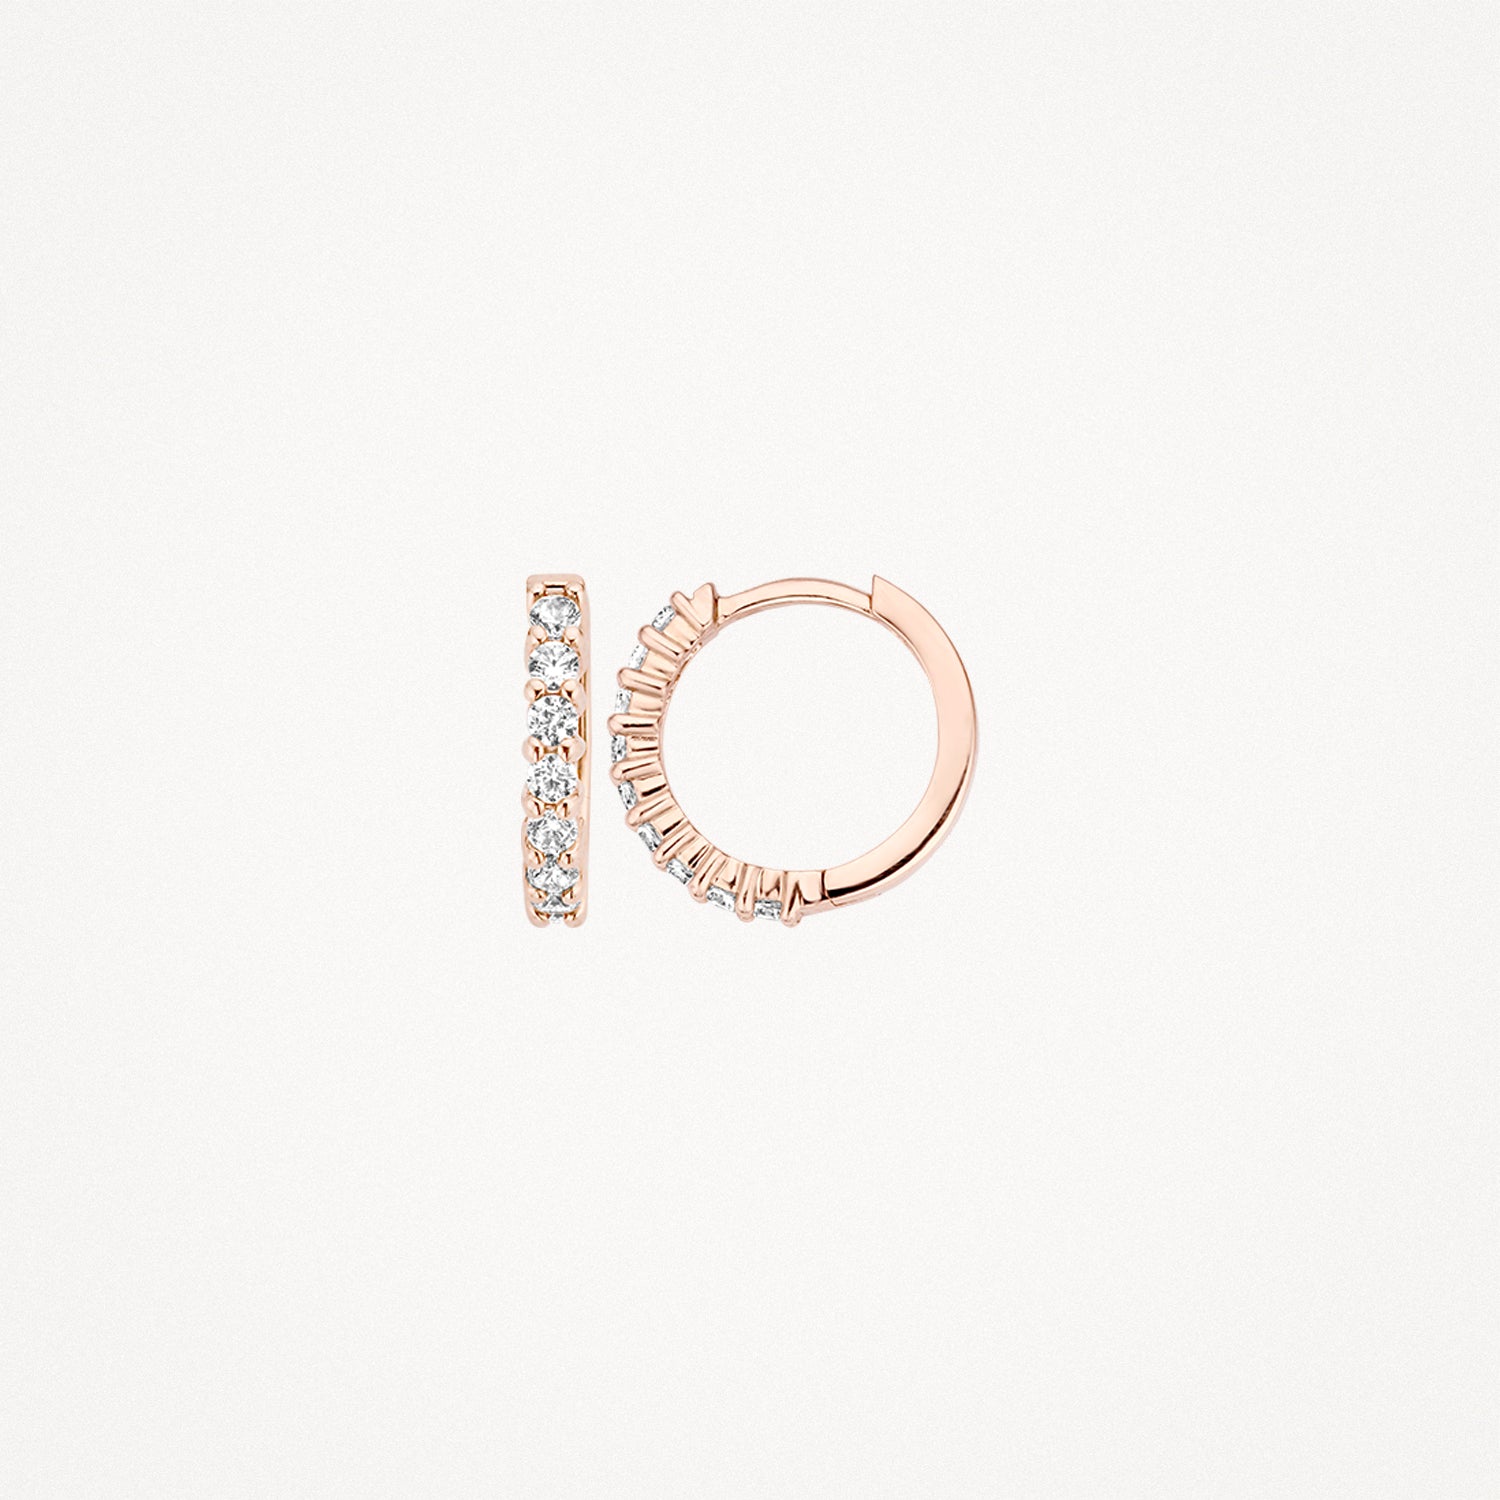 Earrings 7134RZI - 14k Rose Gold with zirconia